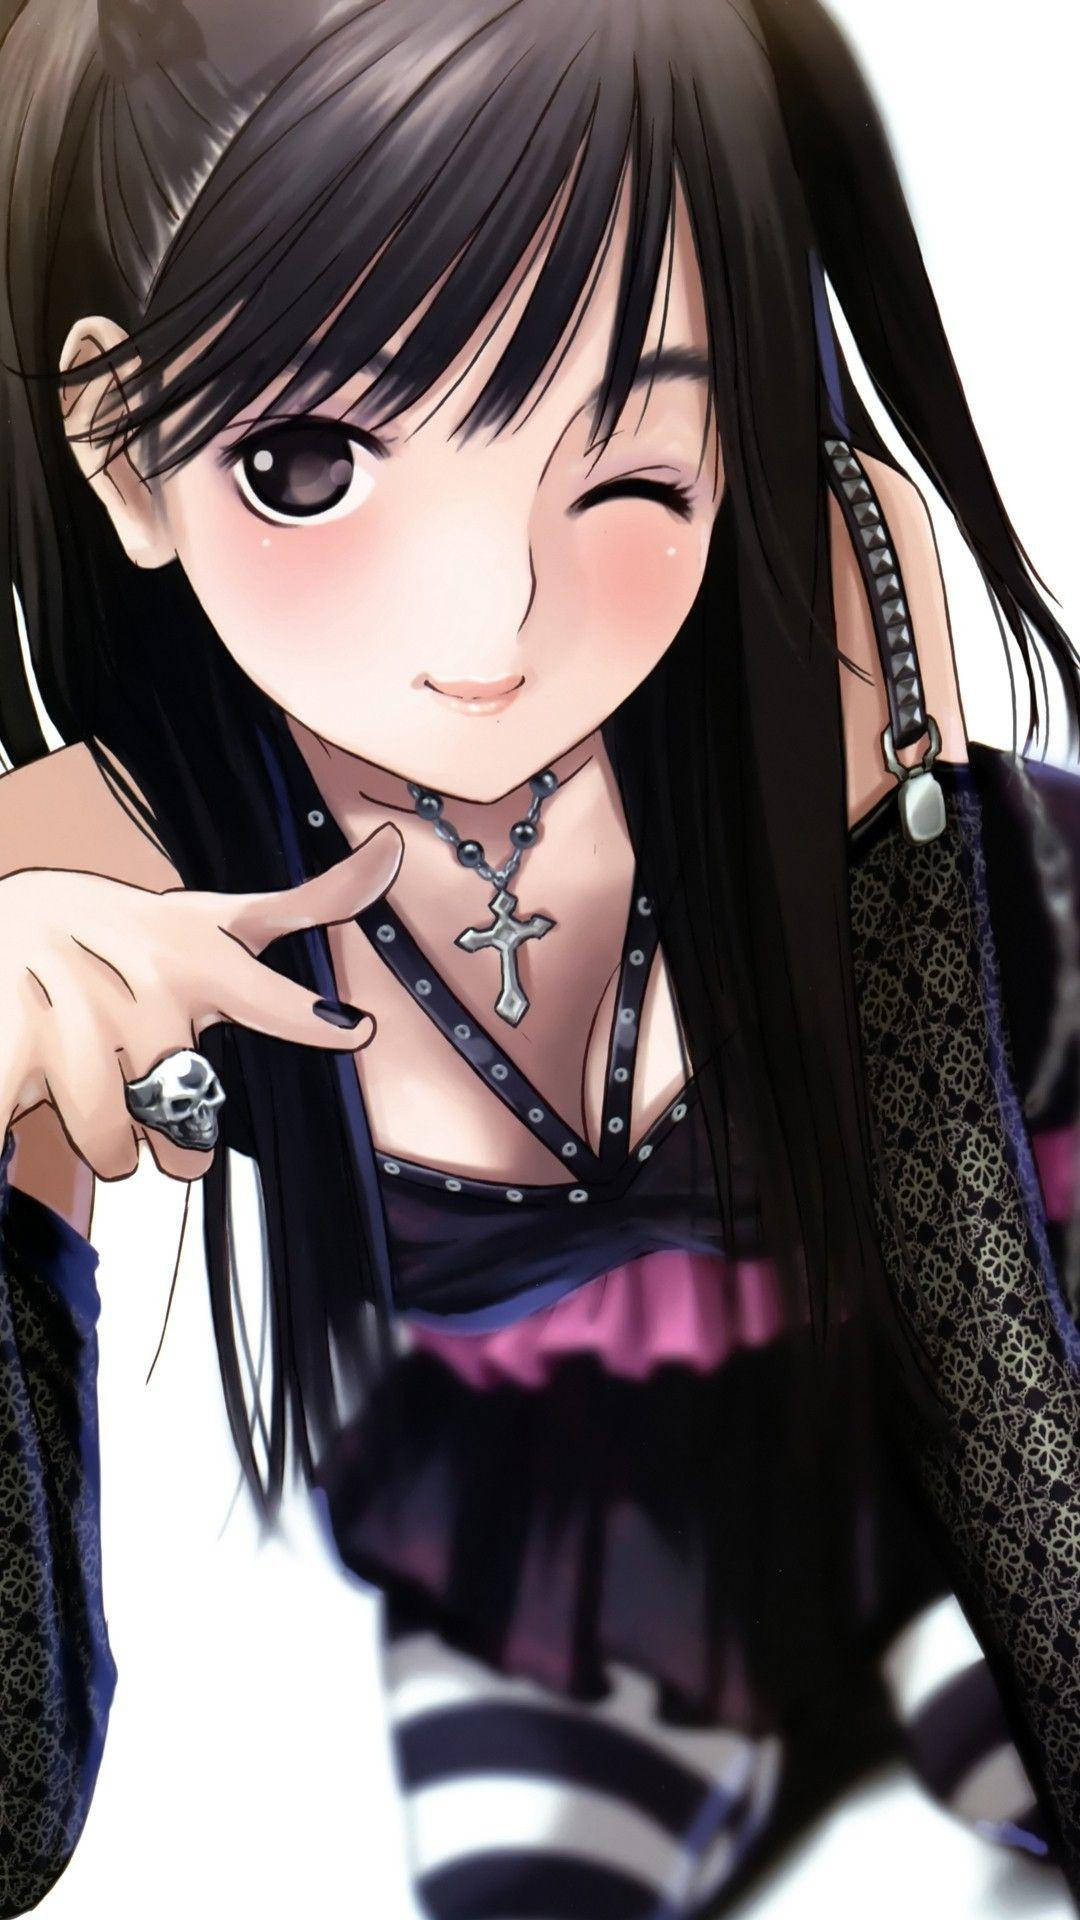 An anime girl using her phone Wallpaper